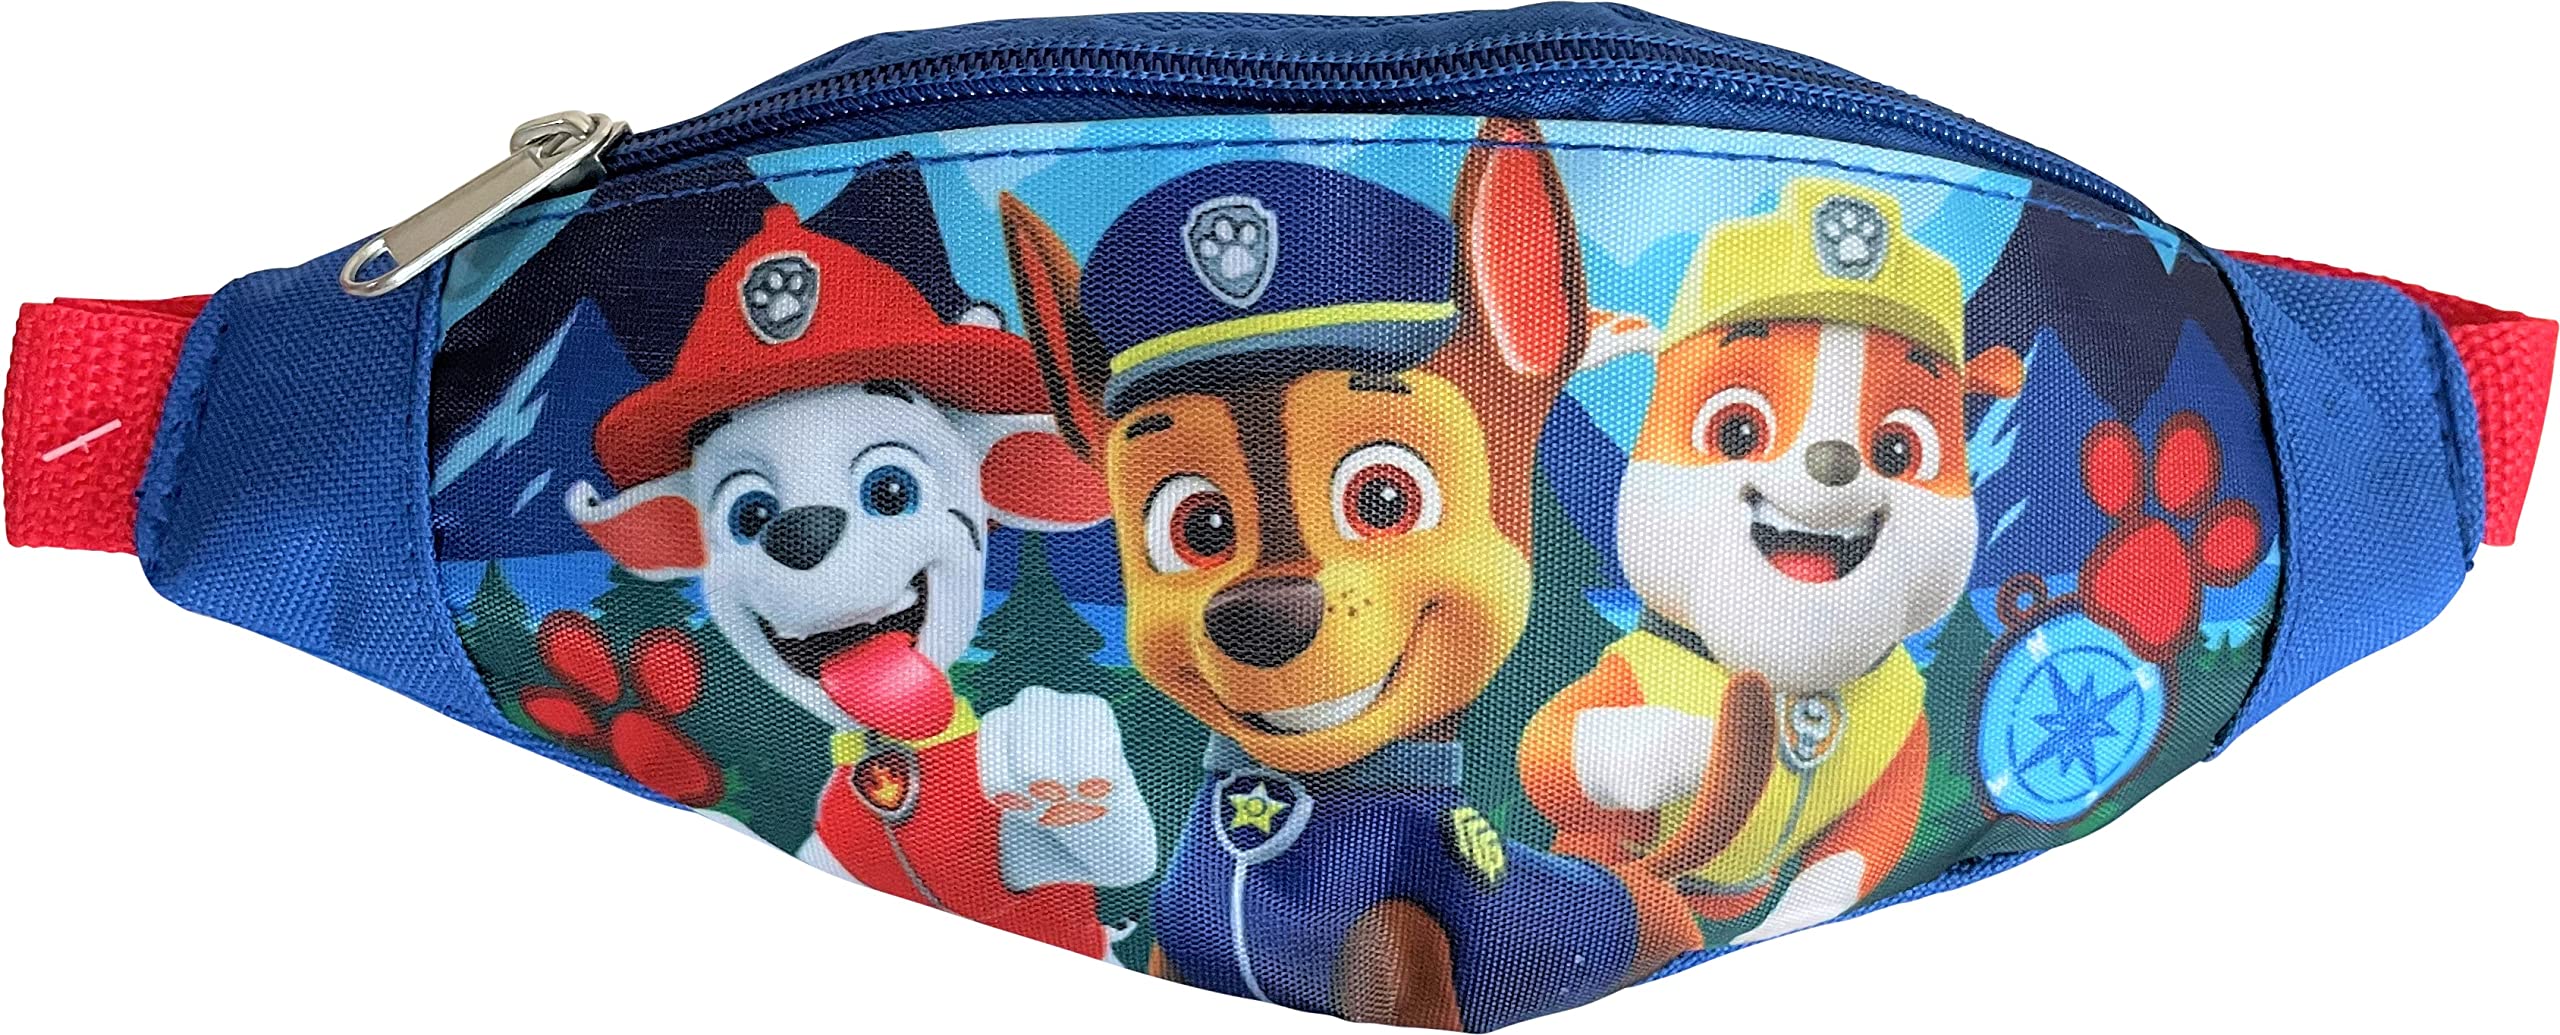 Paw Patrol Little Boy Fanny Pack - Kids Phone Pouch Waist Bag